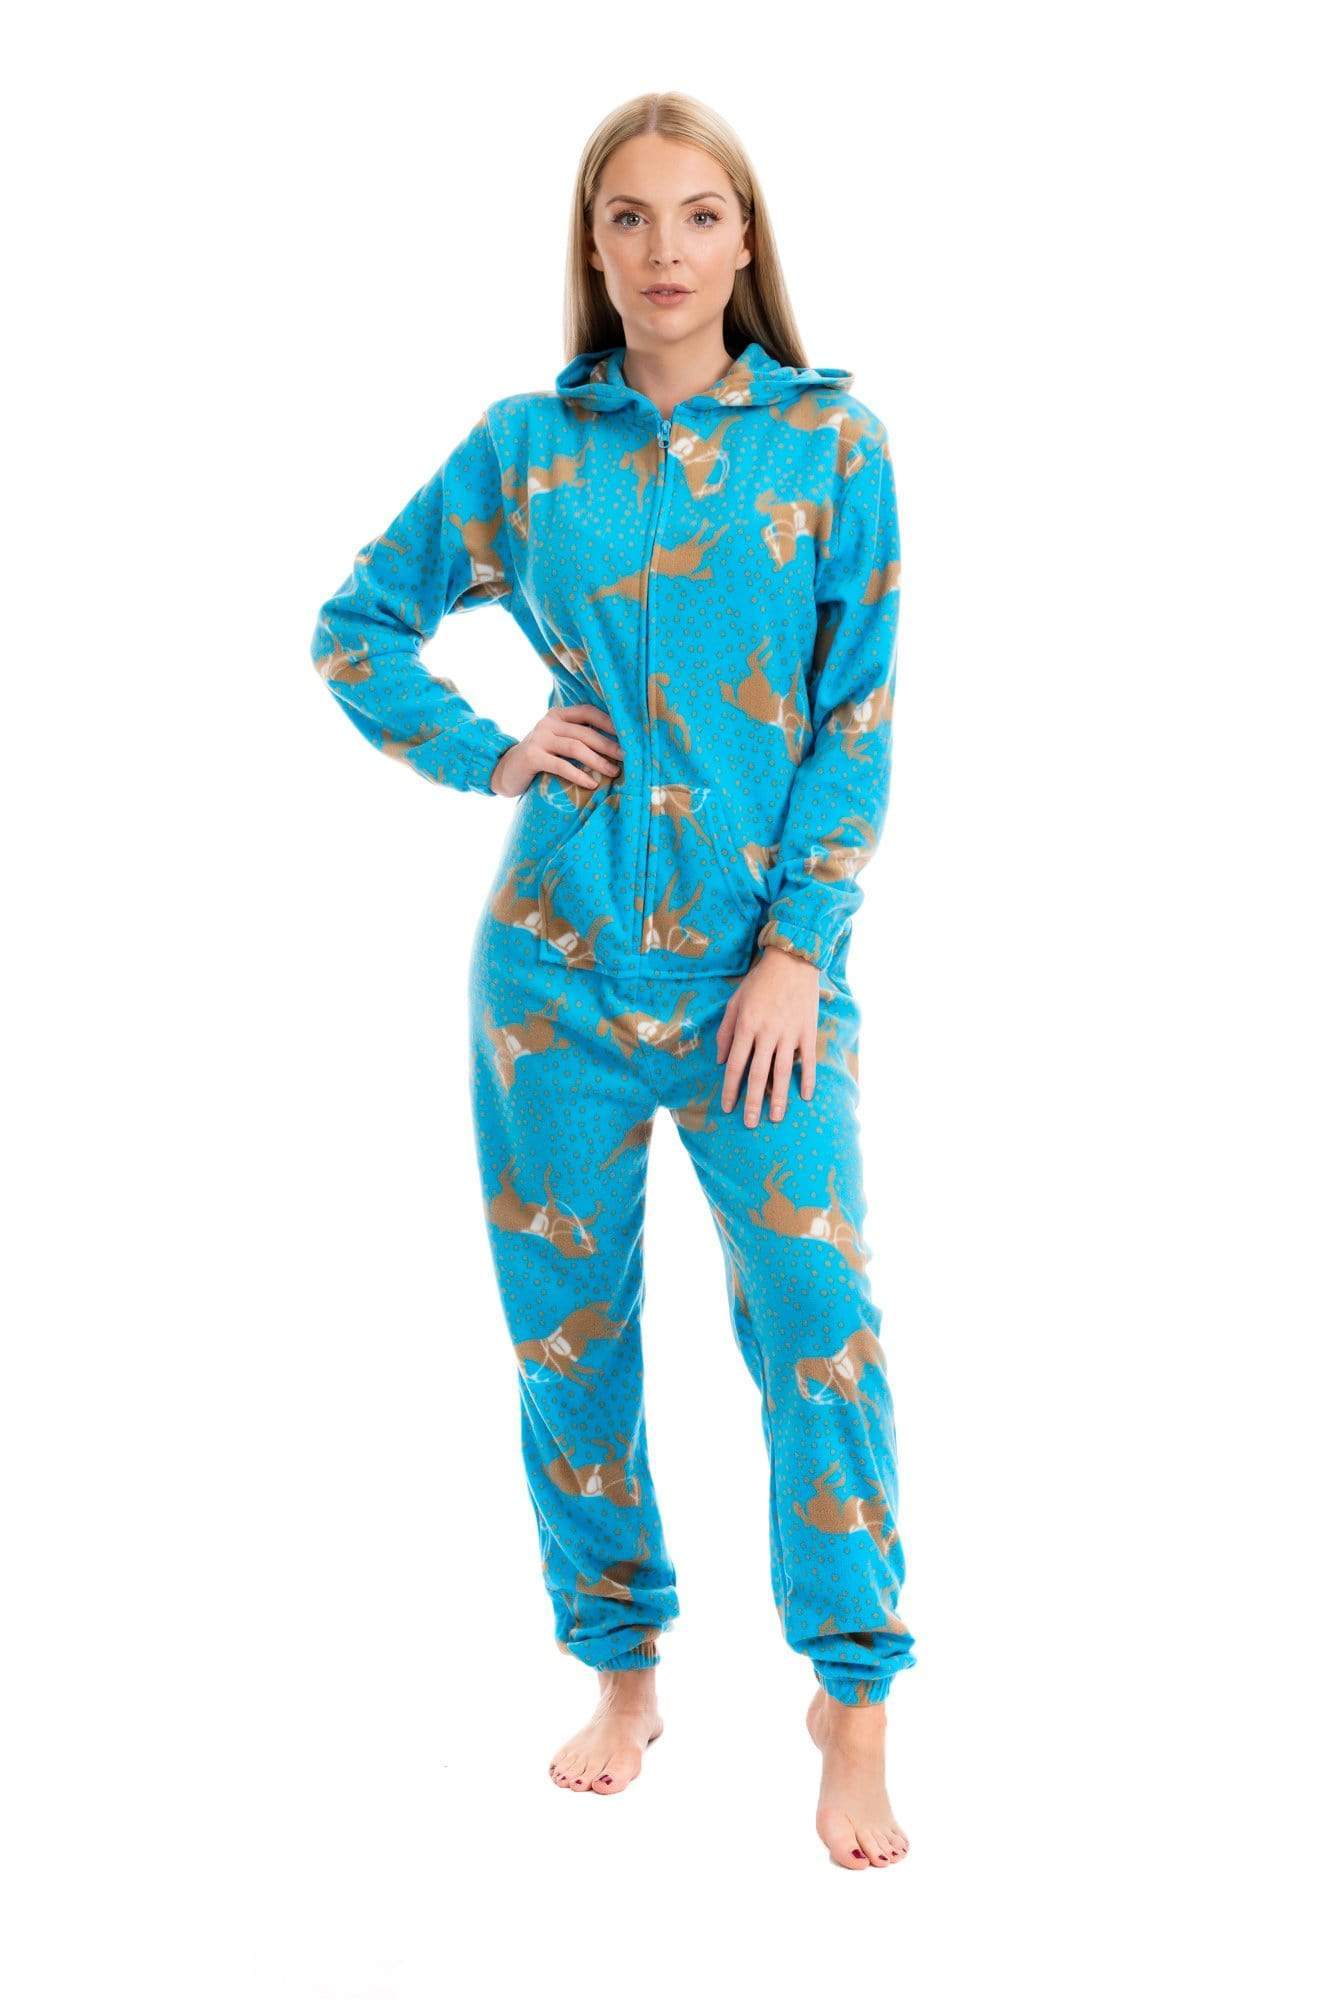 Blue Horse Print Pyjama